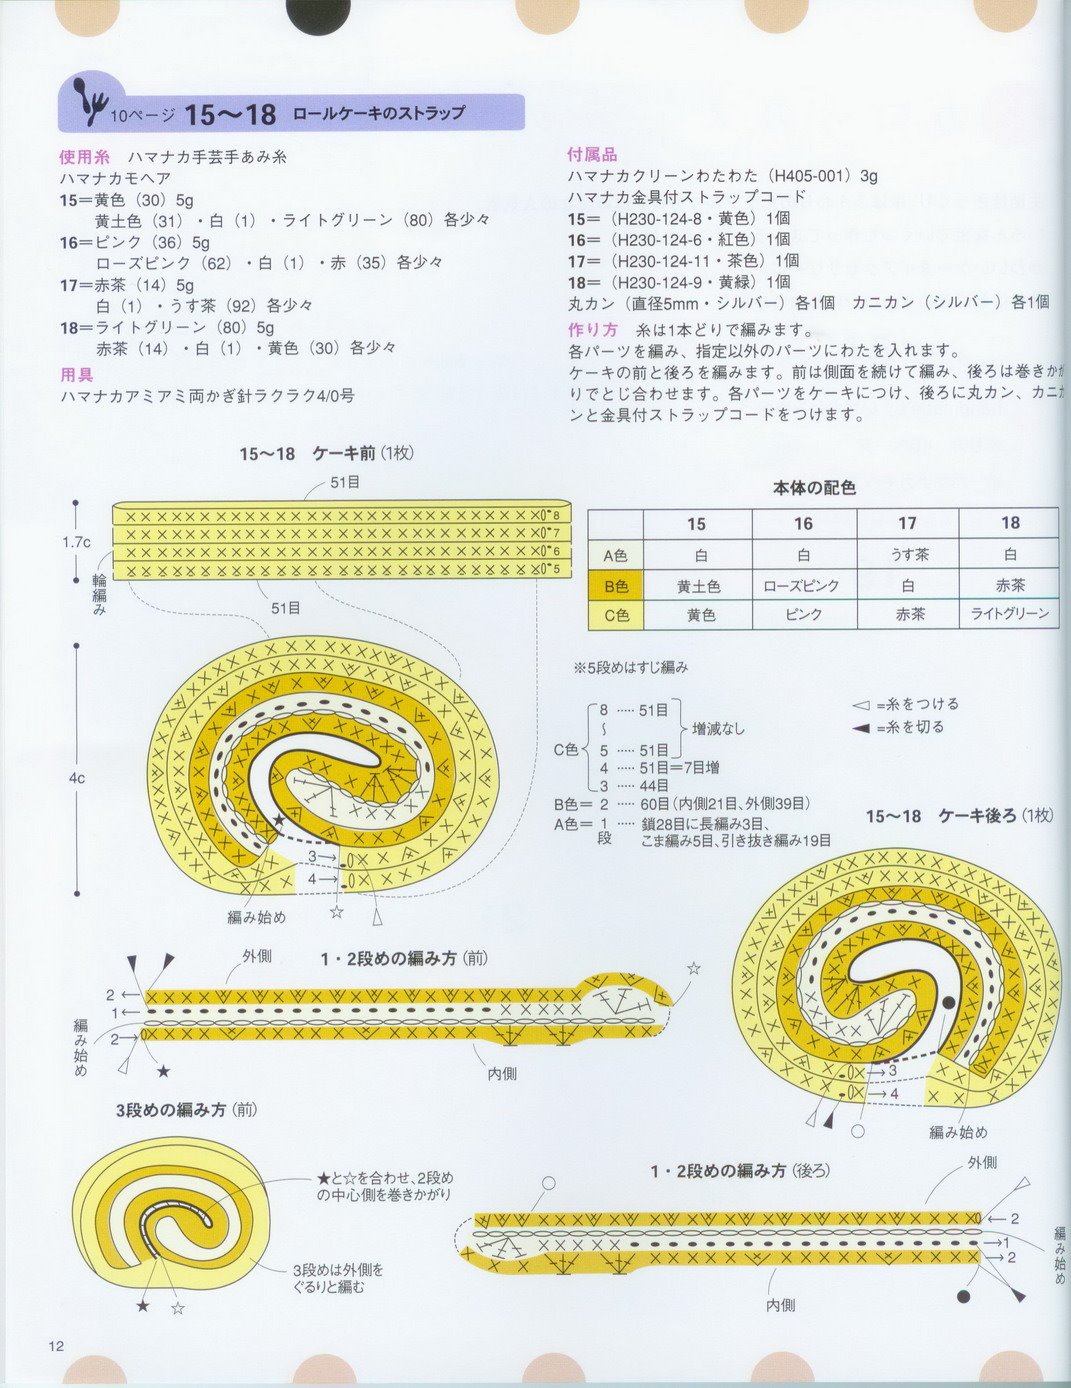 Round sweet amigurumi pattern 1 (2)